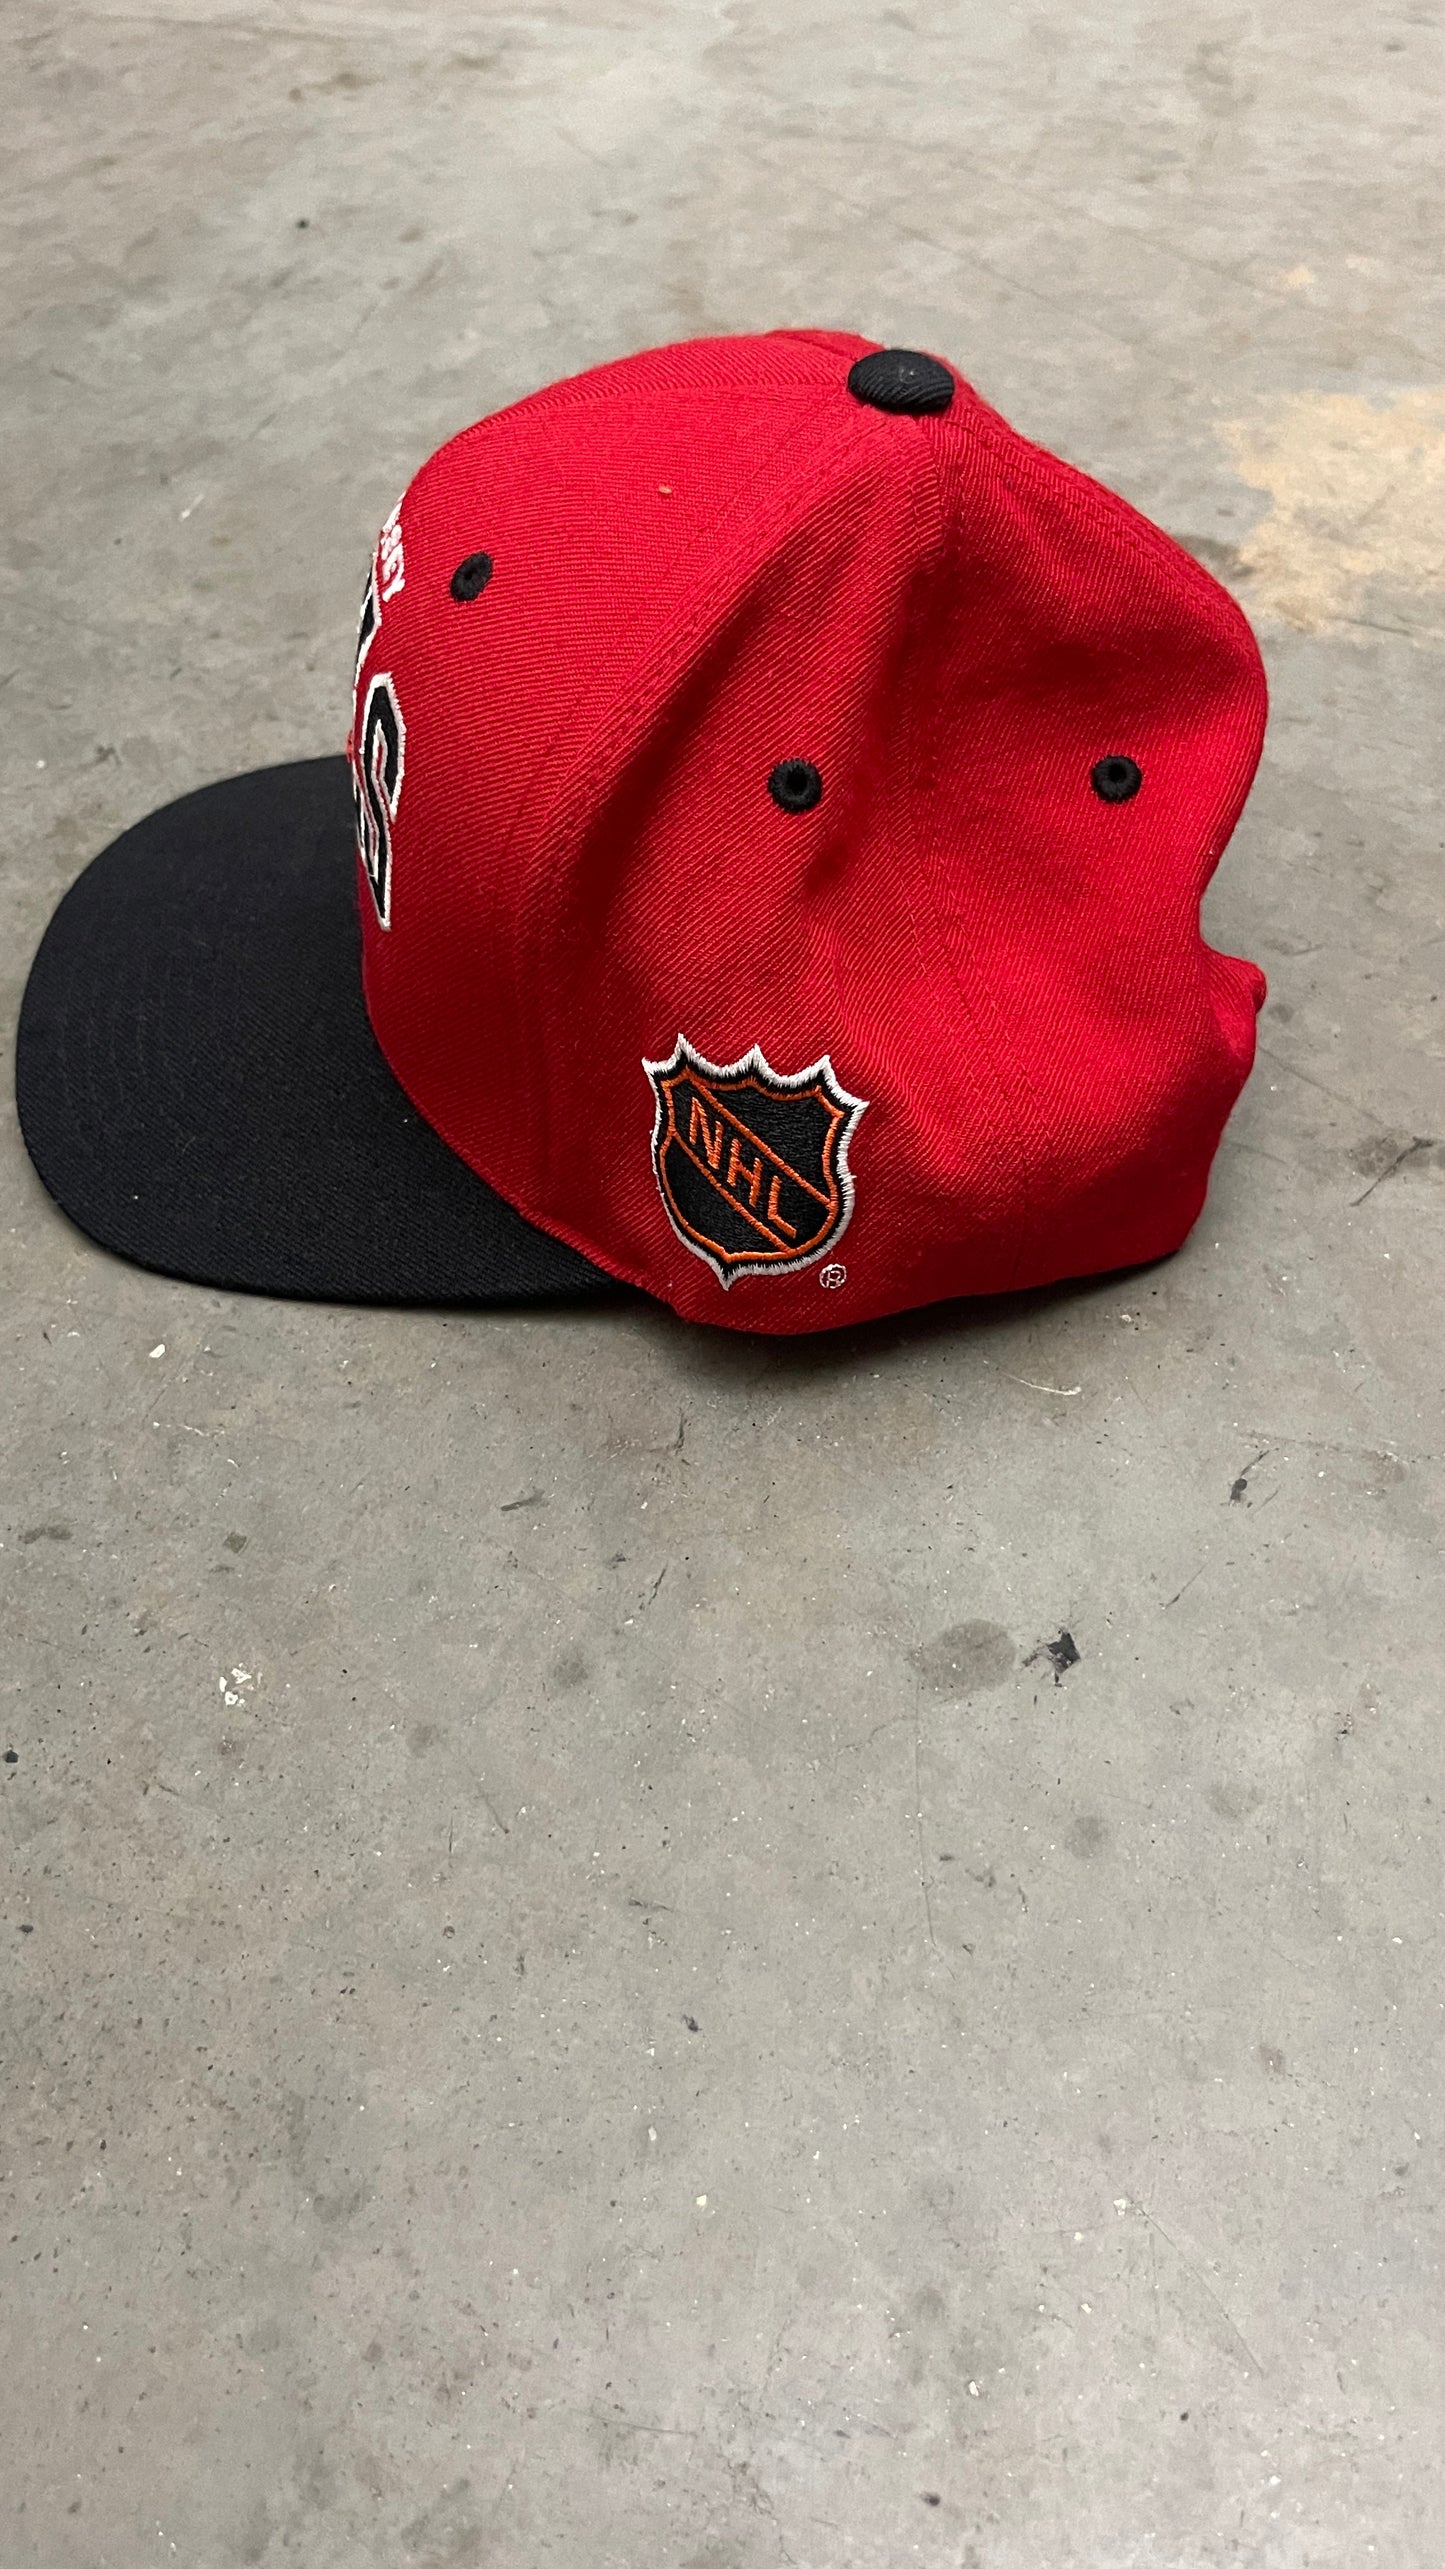 New Jersey Devils Hat